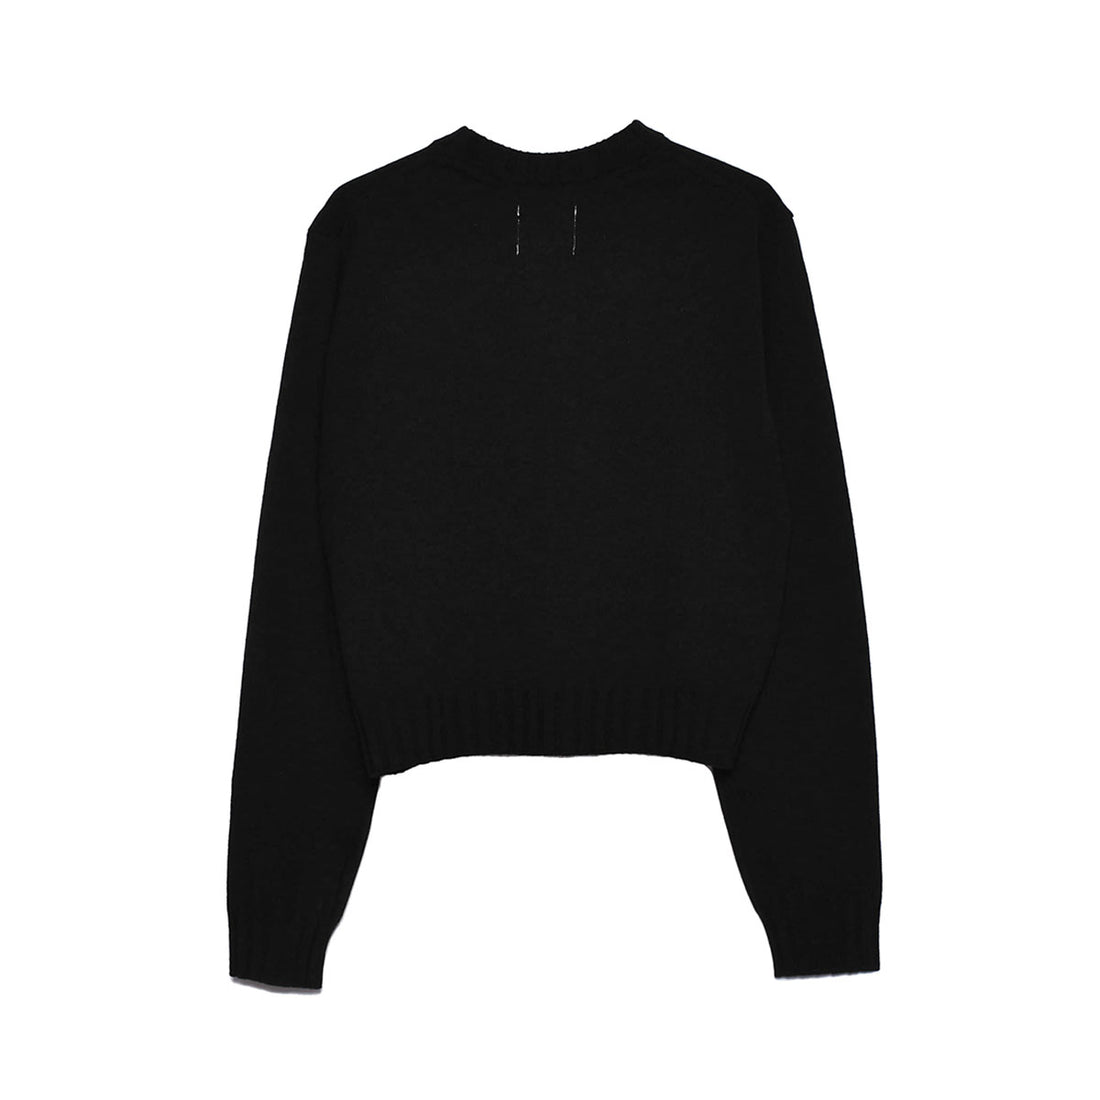 [TAKAHIRO MIYASHITA TheSoloIst]crewneck sweatshirt./BLACK(sk.0002bAW23)